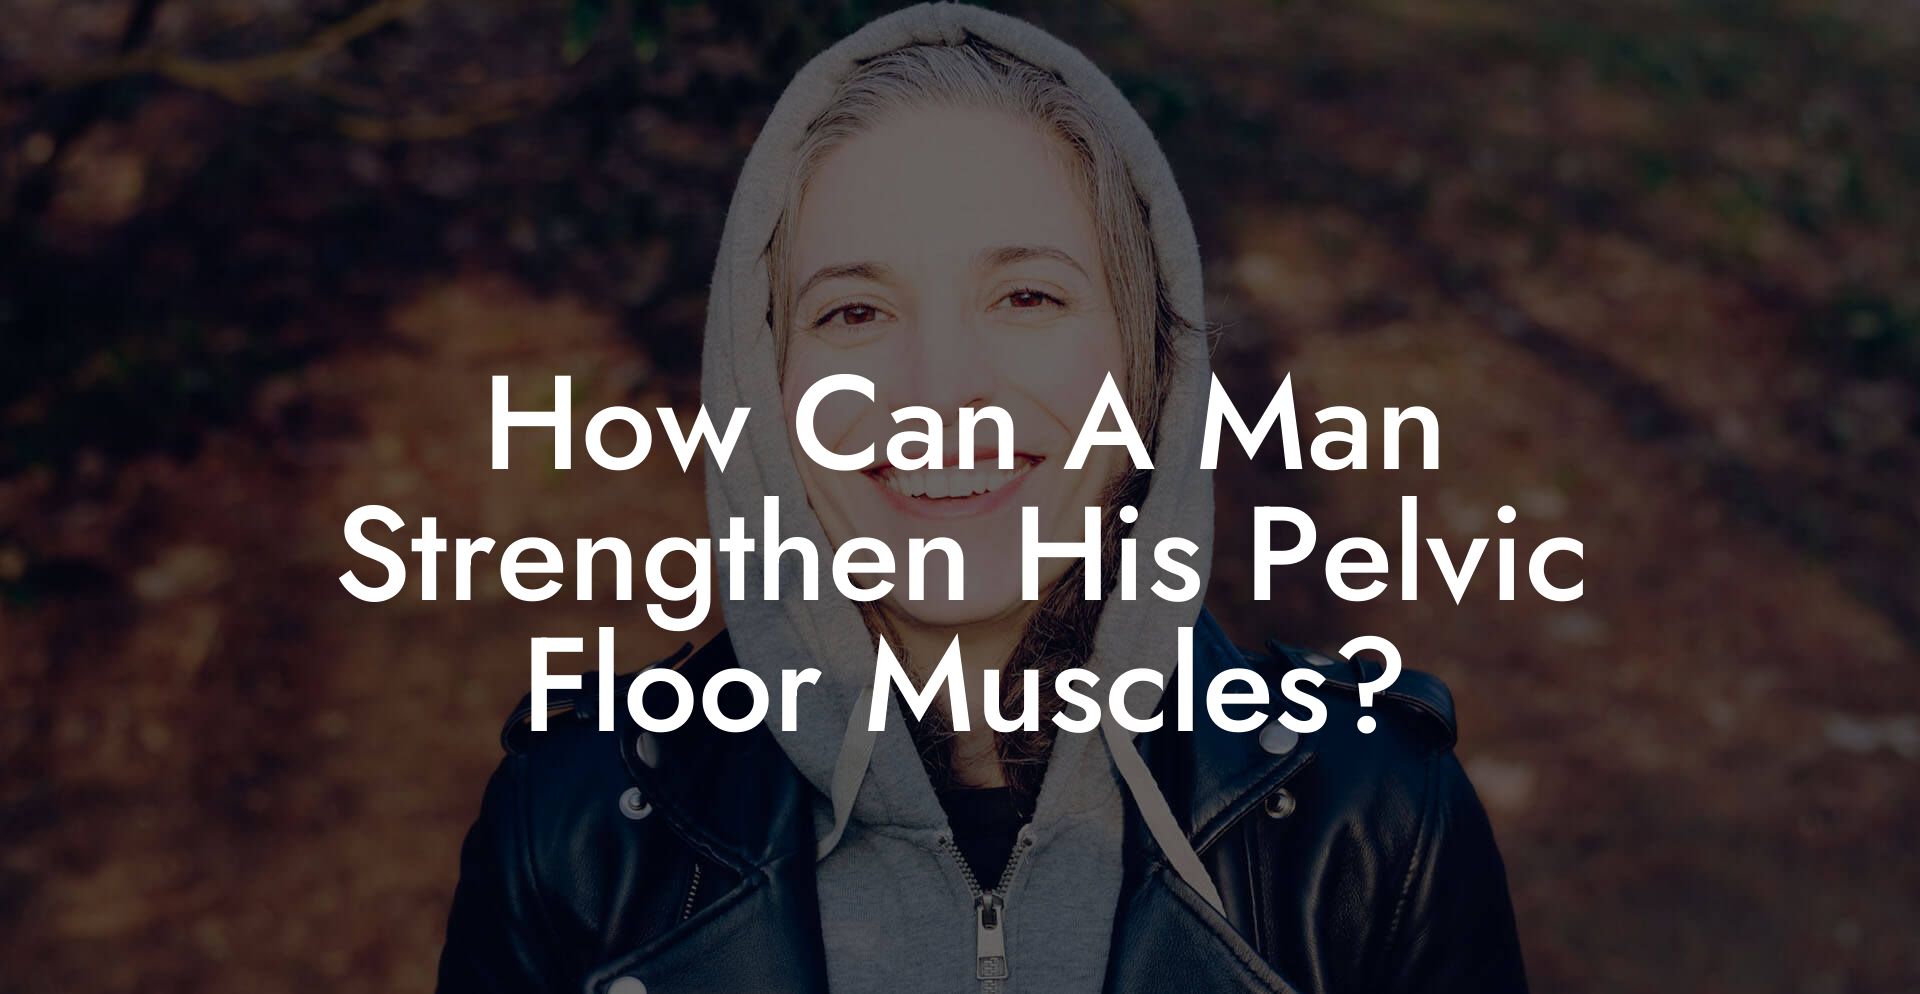 How Can A Man Strengthen His Pelvic Floor Muscles?